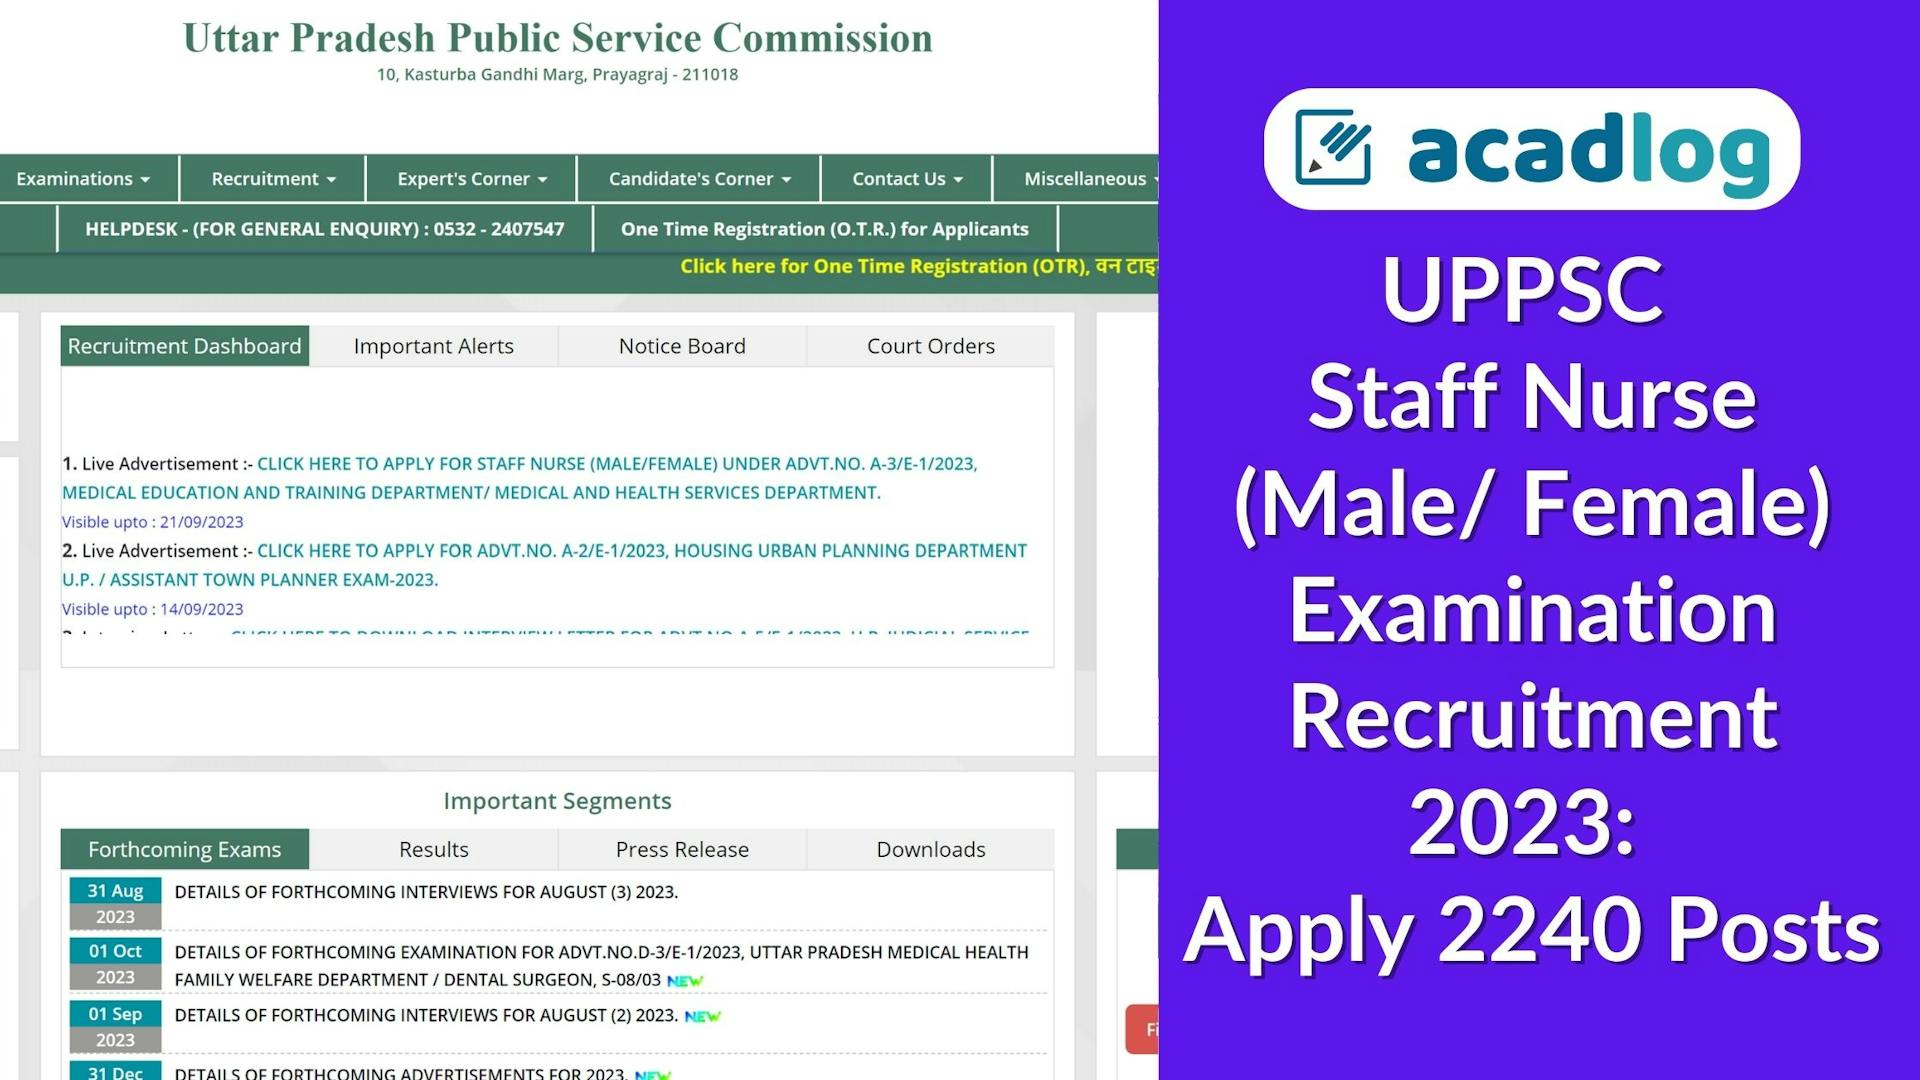 UPPSC Government Staff Nurse Vacancy 2023: Recruitment for 2240 Posts